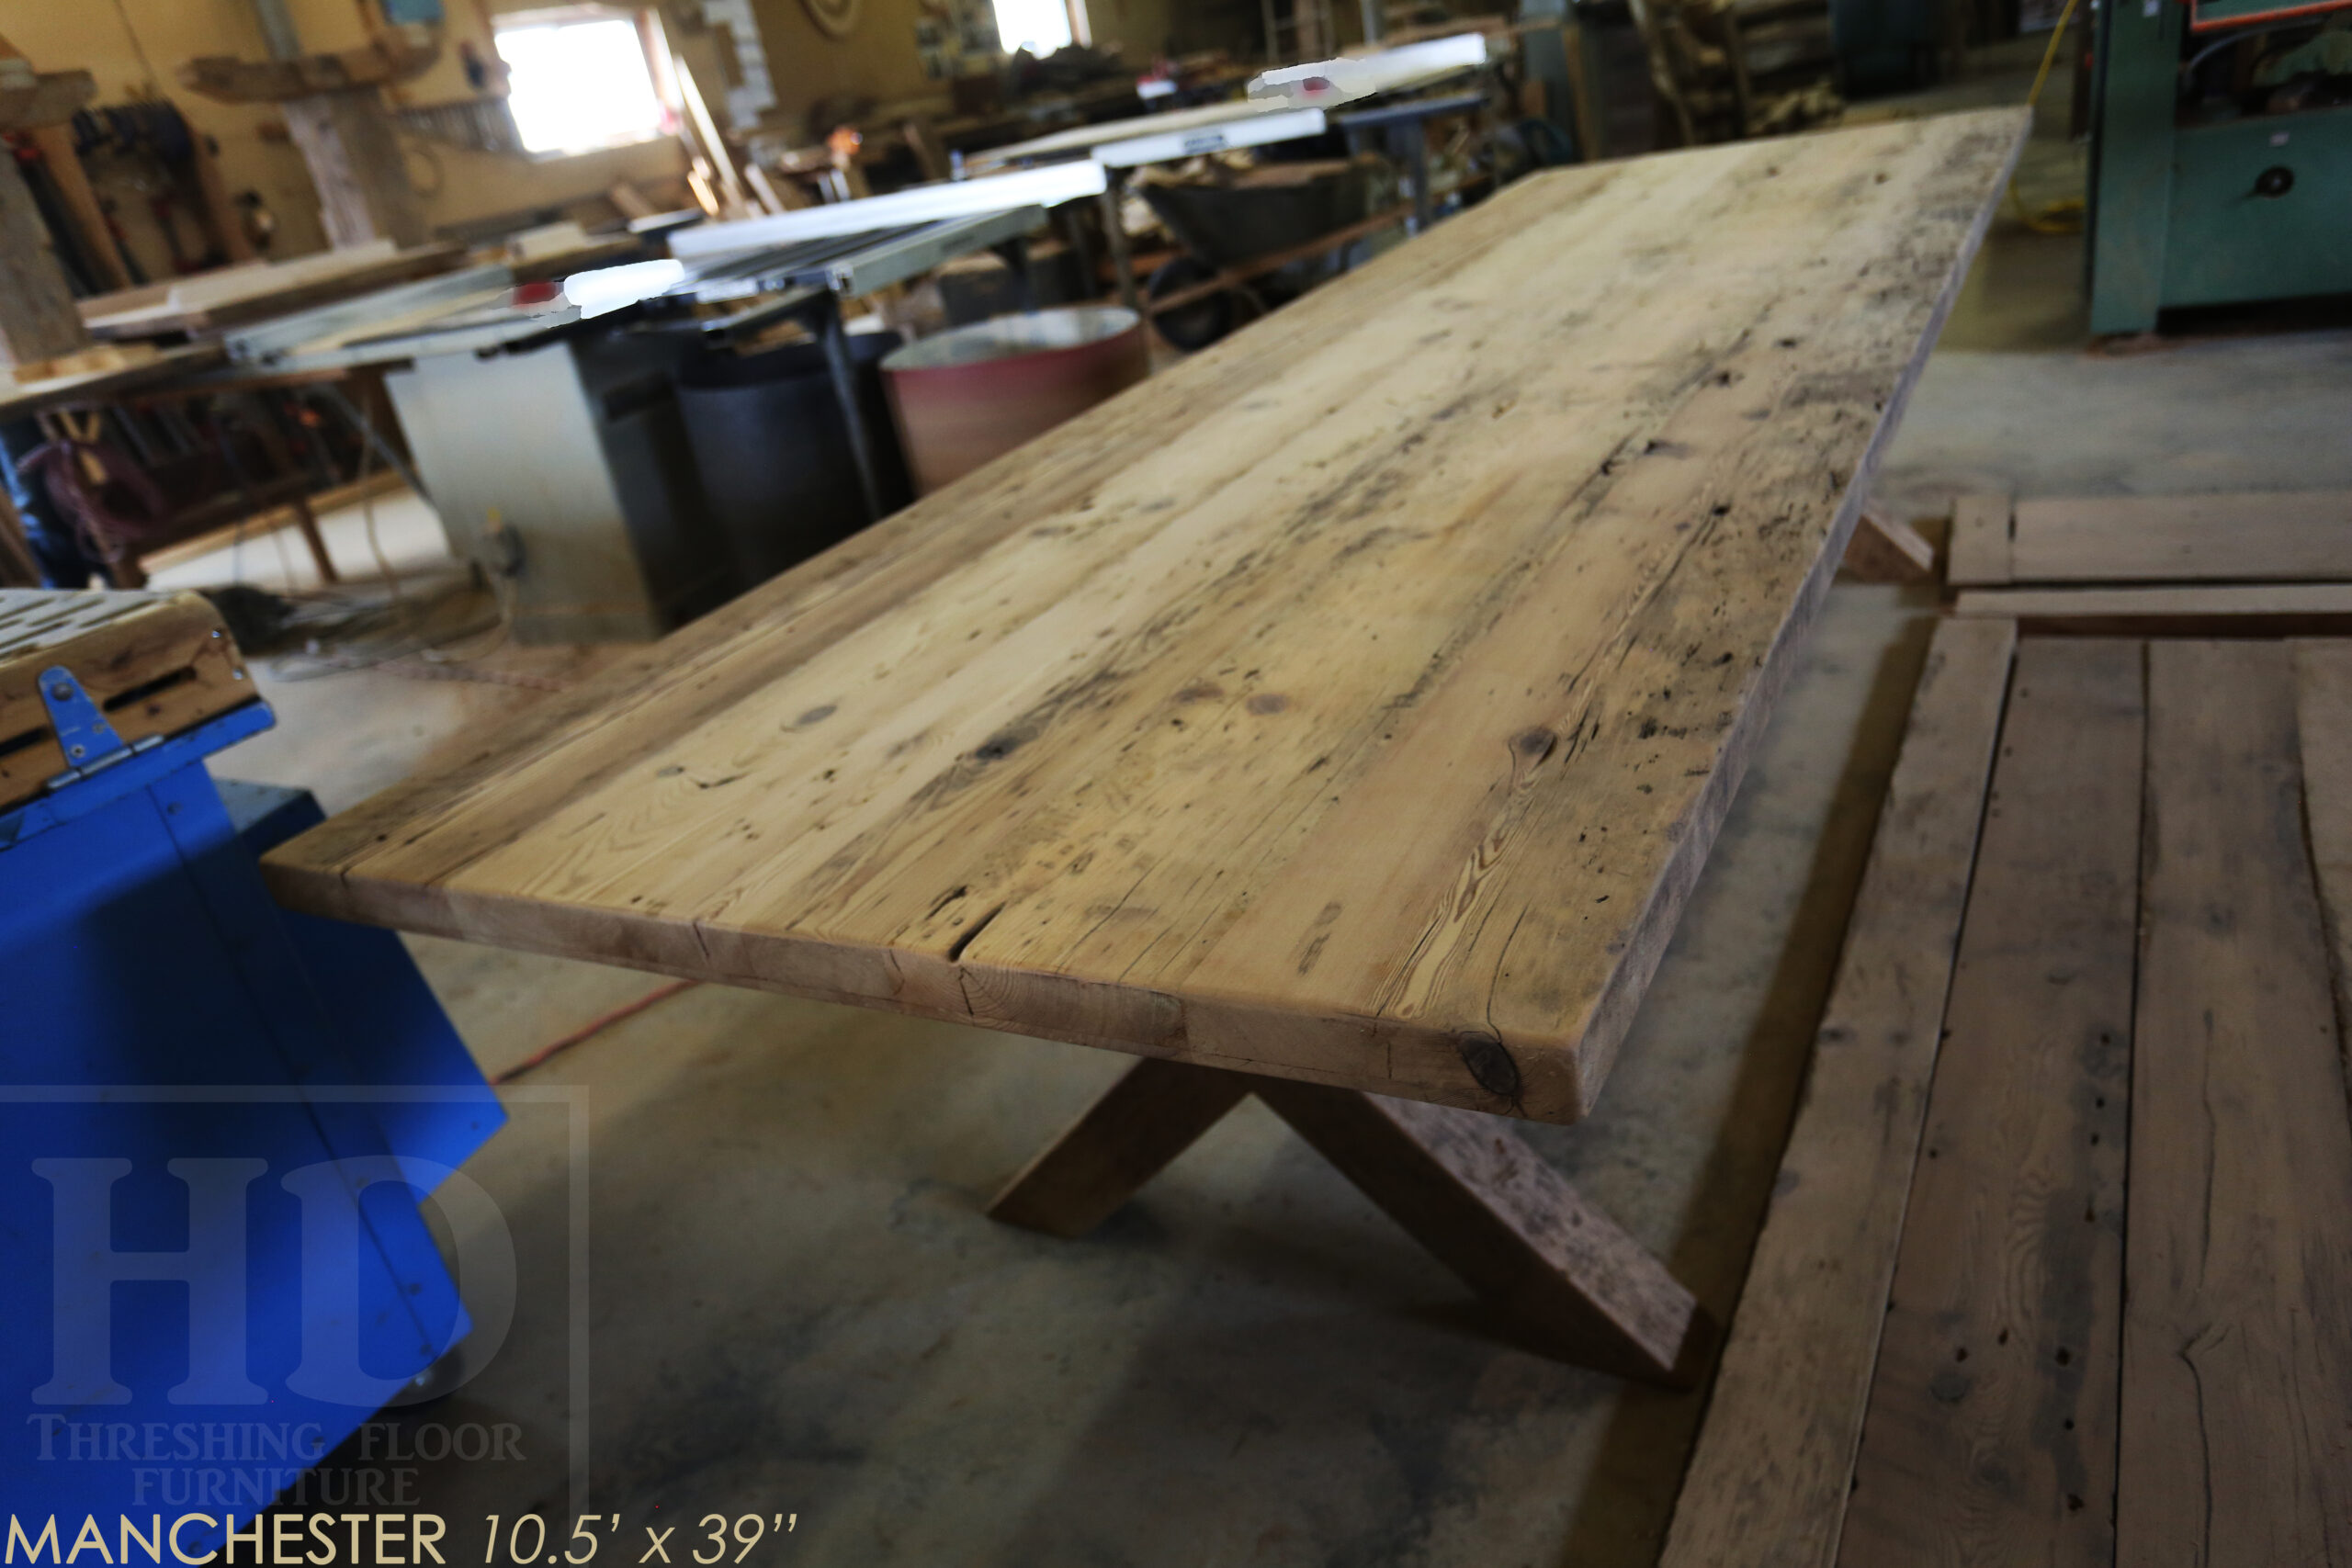 10.5' Ontario Barnwood table we made for a Chatham, Ontario Home - 39" wide - X Base -  2" Hemlock Threshing Floor Construction - Original barnwood edges & distressing maintained - Satin polyurethane finish [no epoxy] - www.table.ca